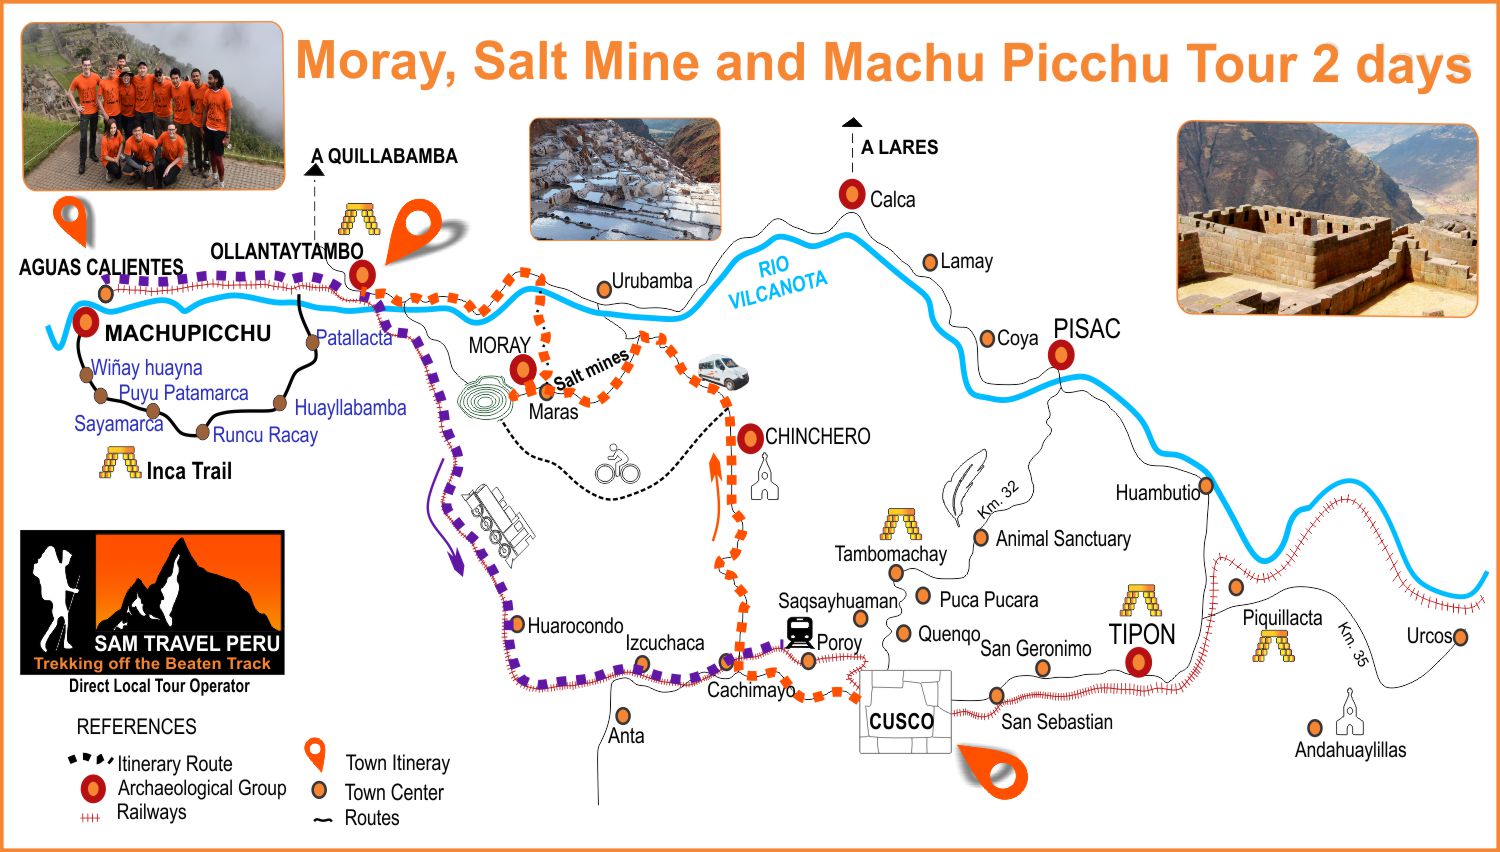 Moray Salt Mine and Machu Picchu Tour 2 days